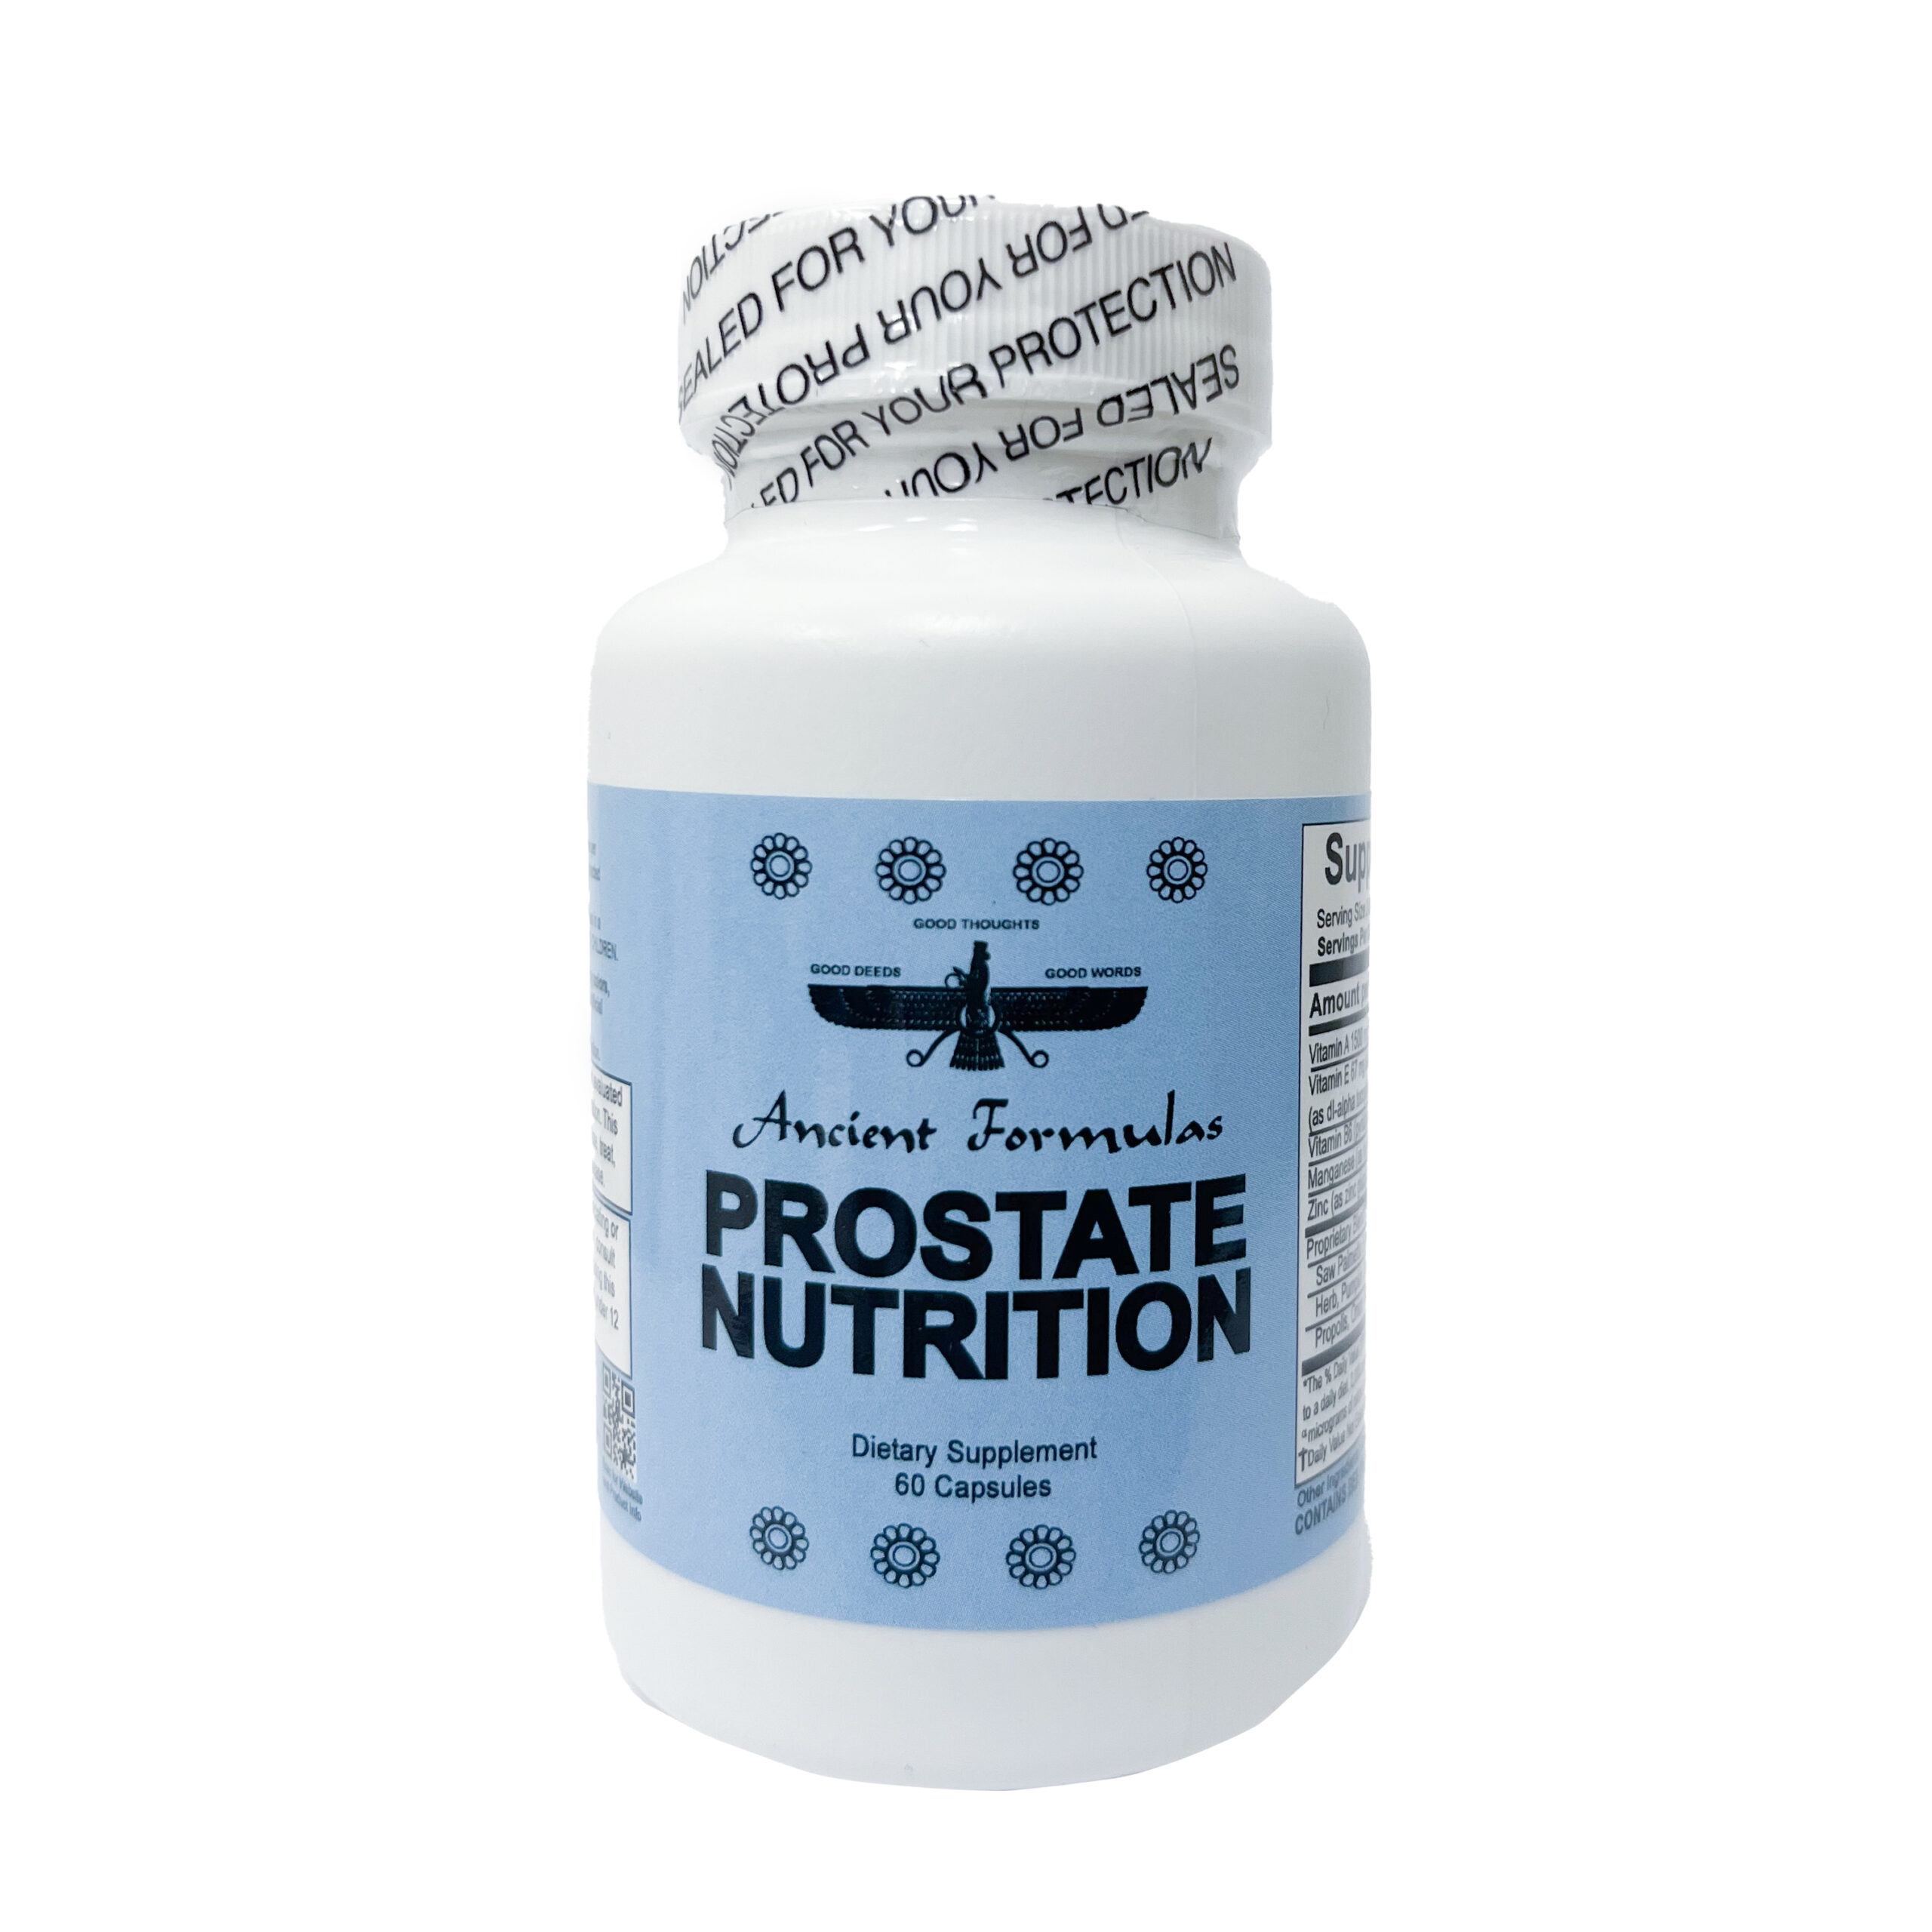 Prostate Nutrition